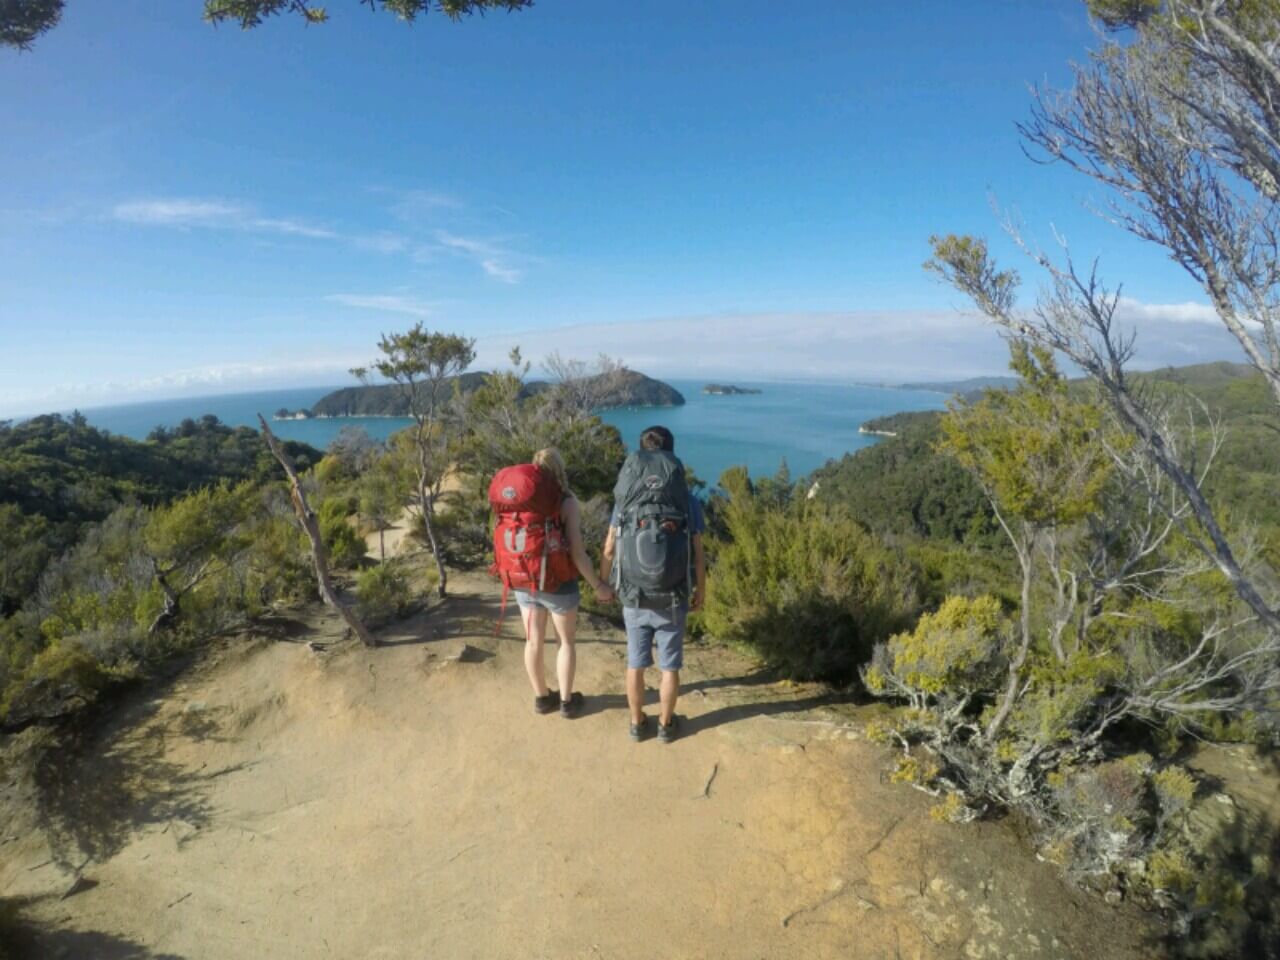 Looking out over Abel Tasman National Park